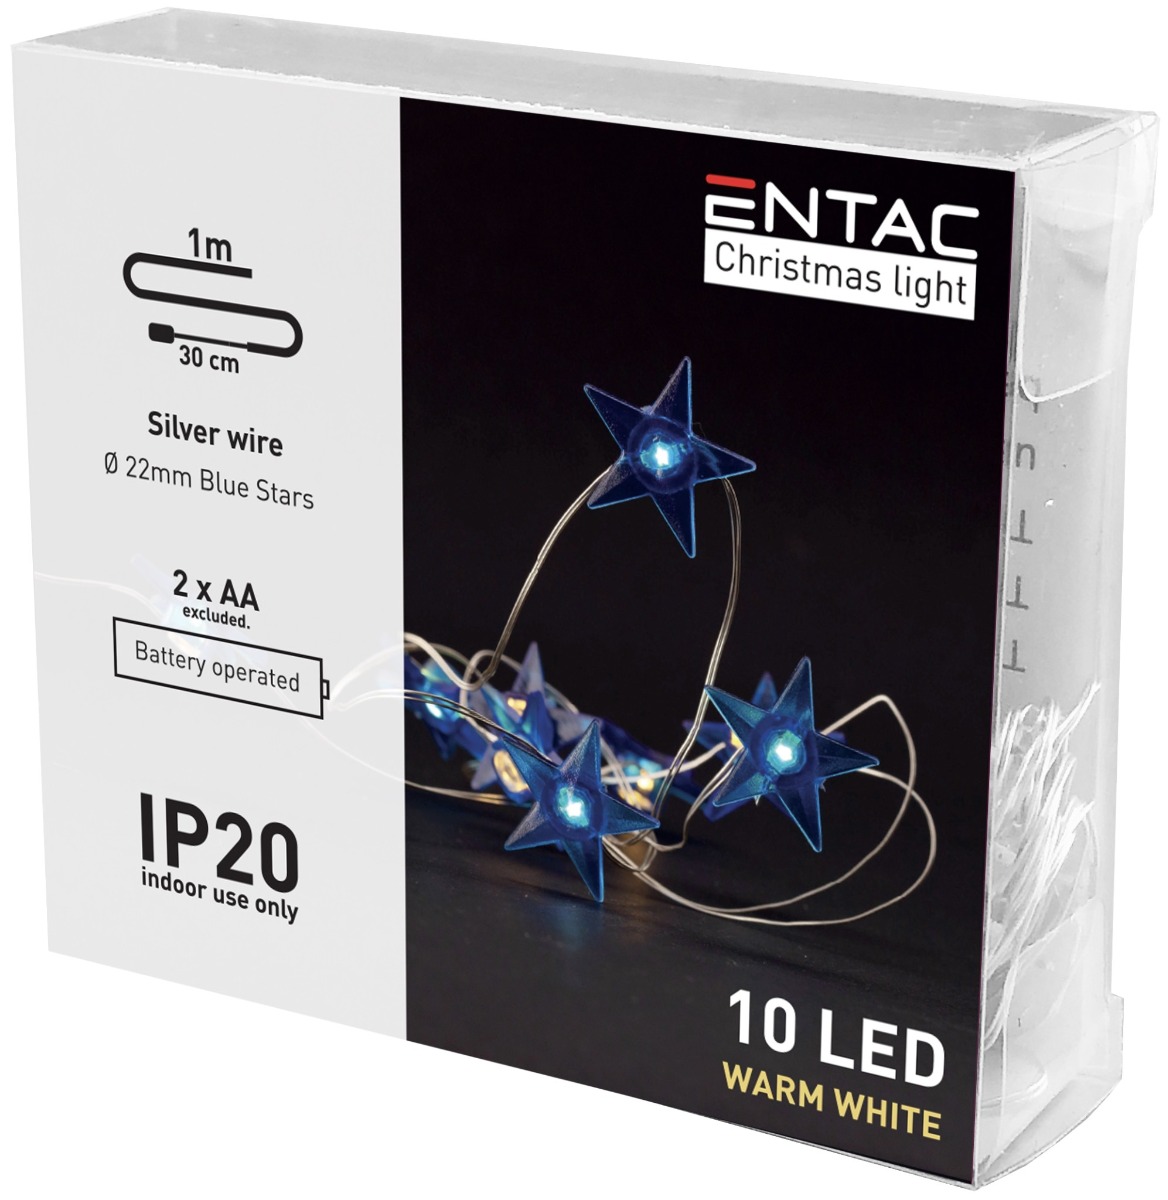 Entac Χριστουγεννιάτικα Εσωτερικά Μπλέ Αστέρια 10 LED Θερμό 1m (2xAA Δεν περιλαμβ.)